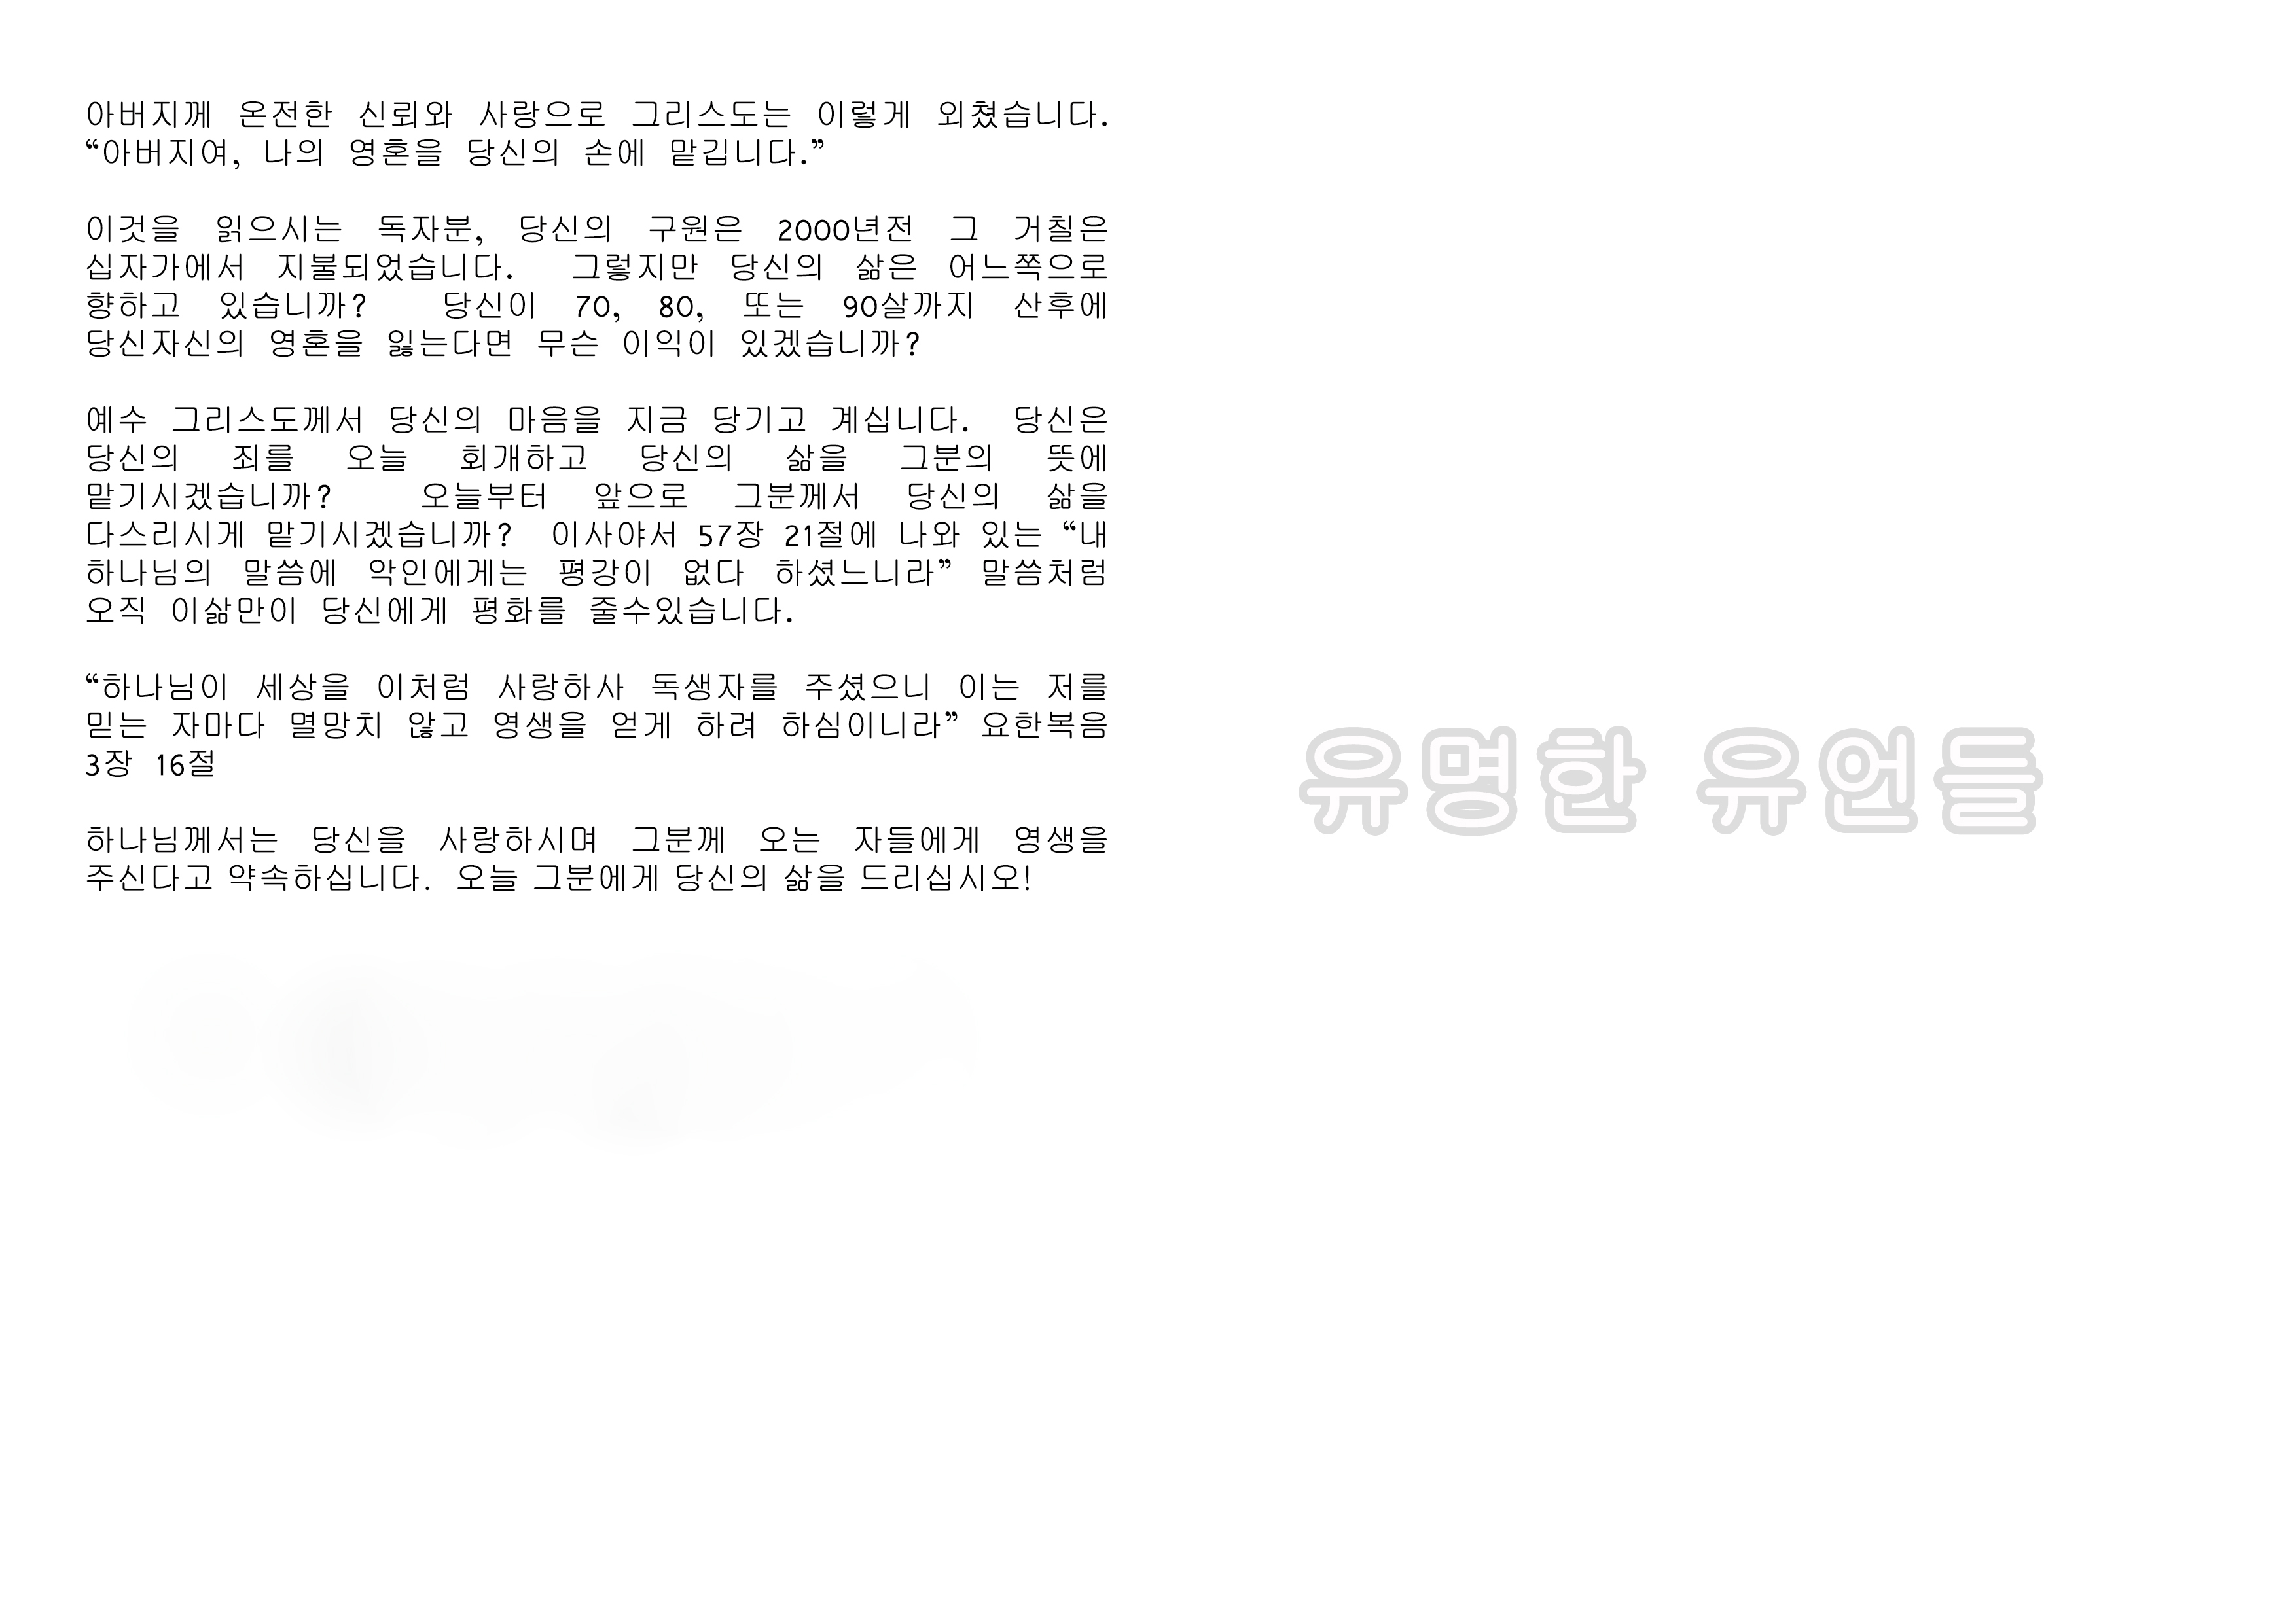 Famous-last-words-korean-page-32